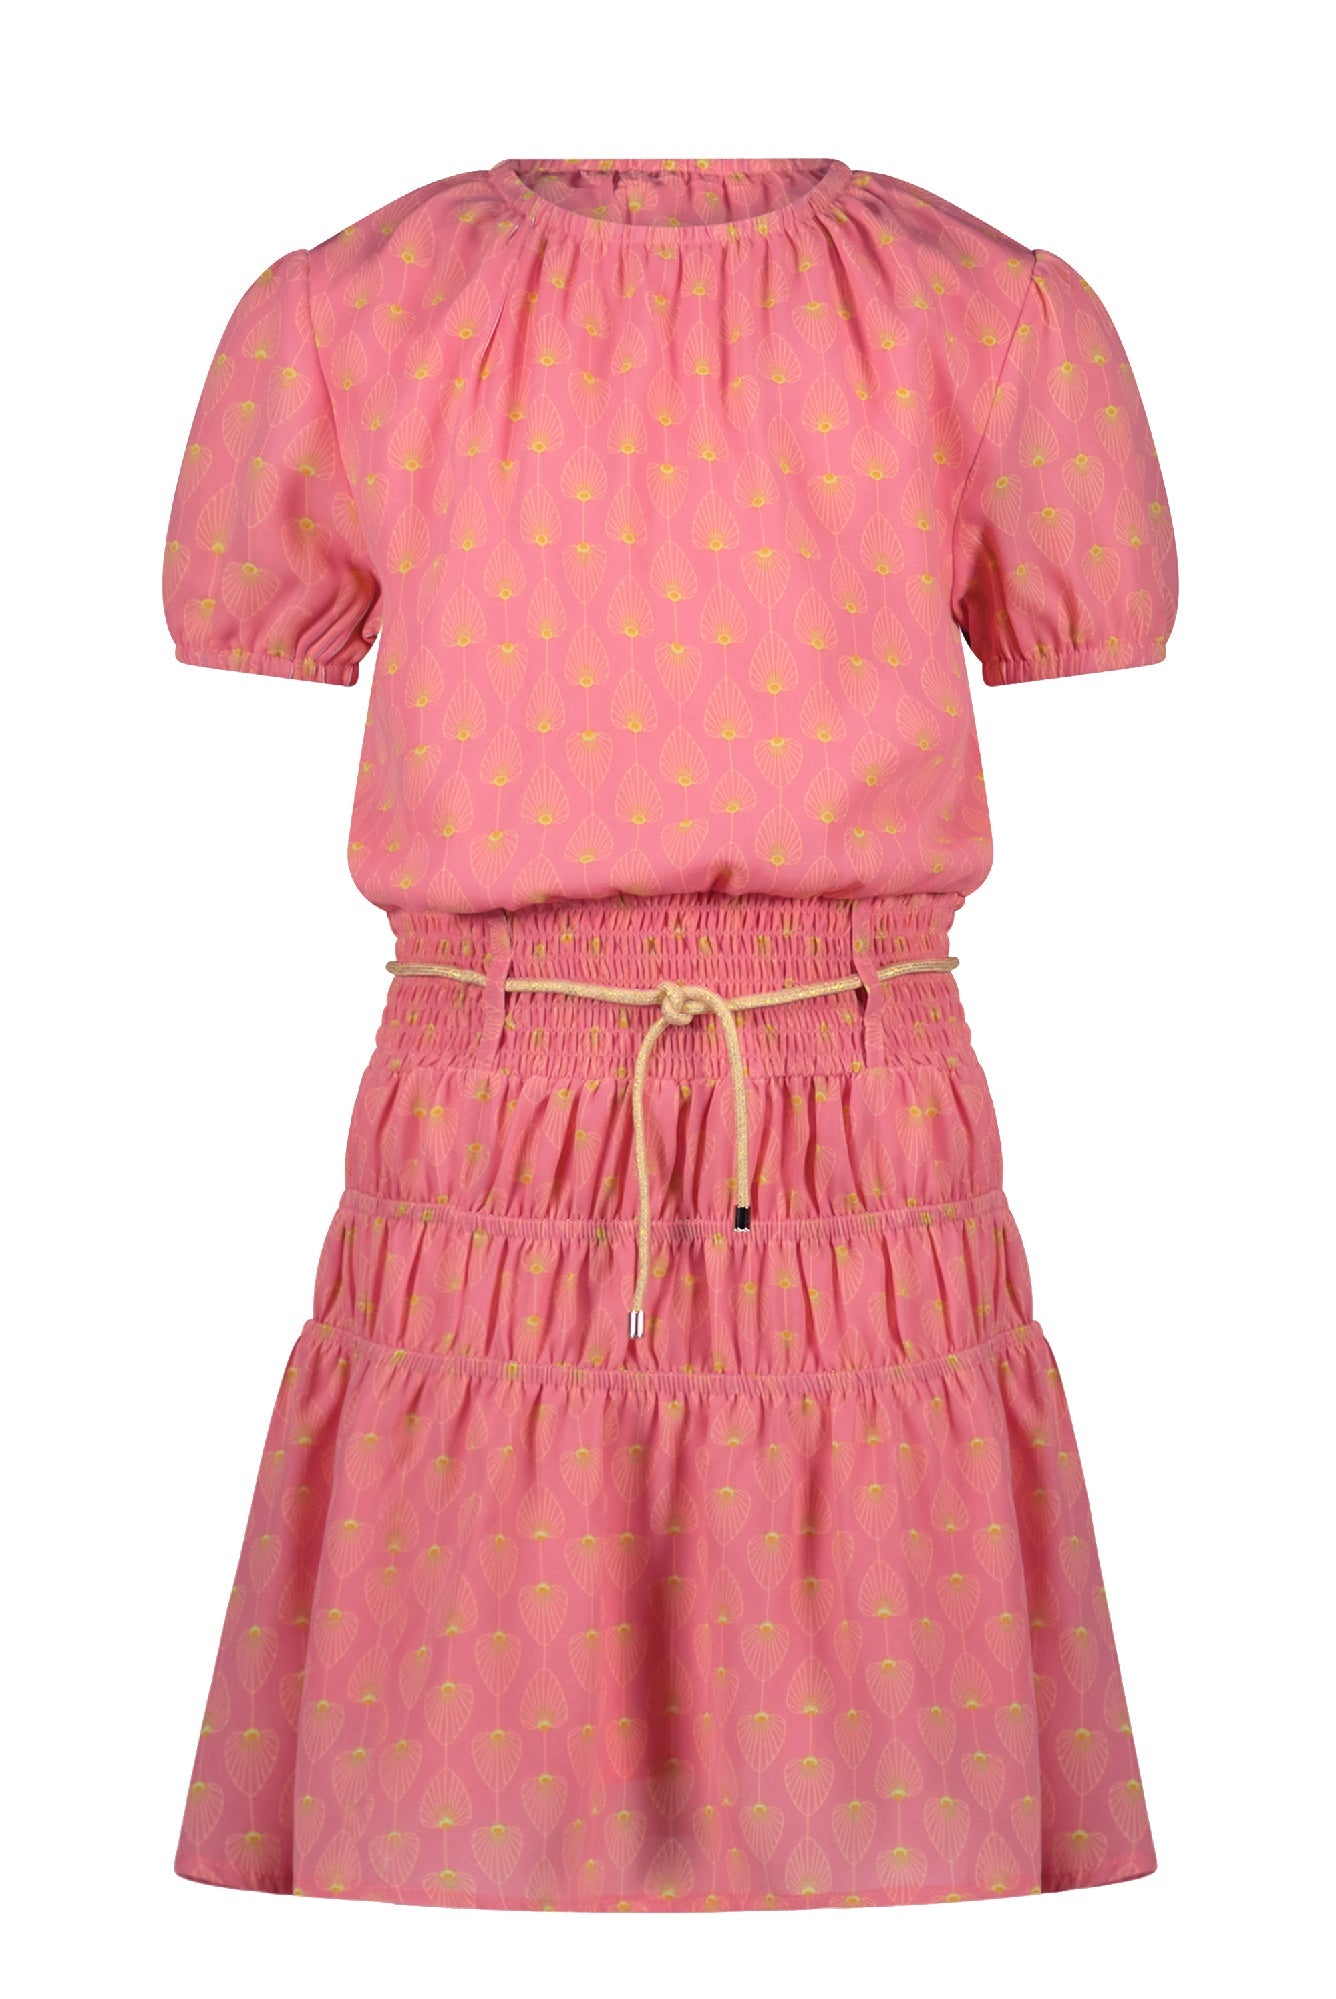 Meisjes Manyu dress S/SL with smock at waist van NoNo in de kleur Peach Blossom in maat 134-140.